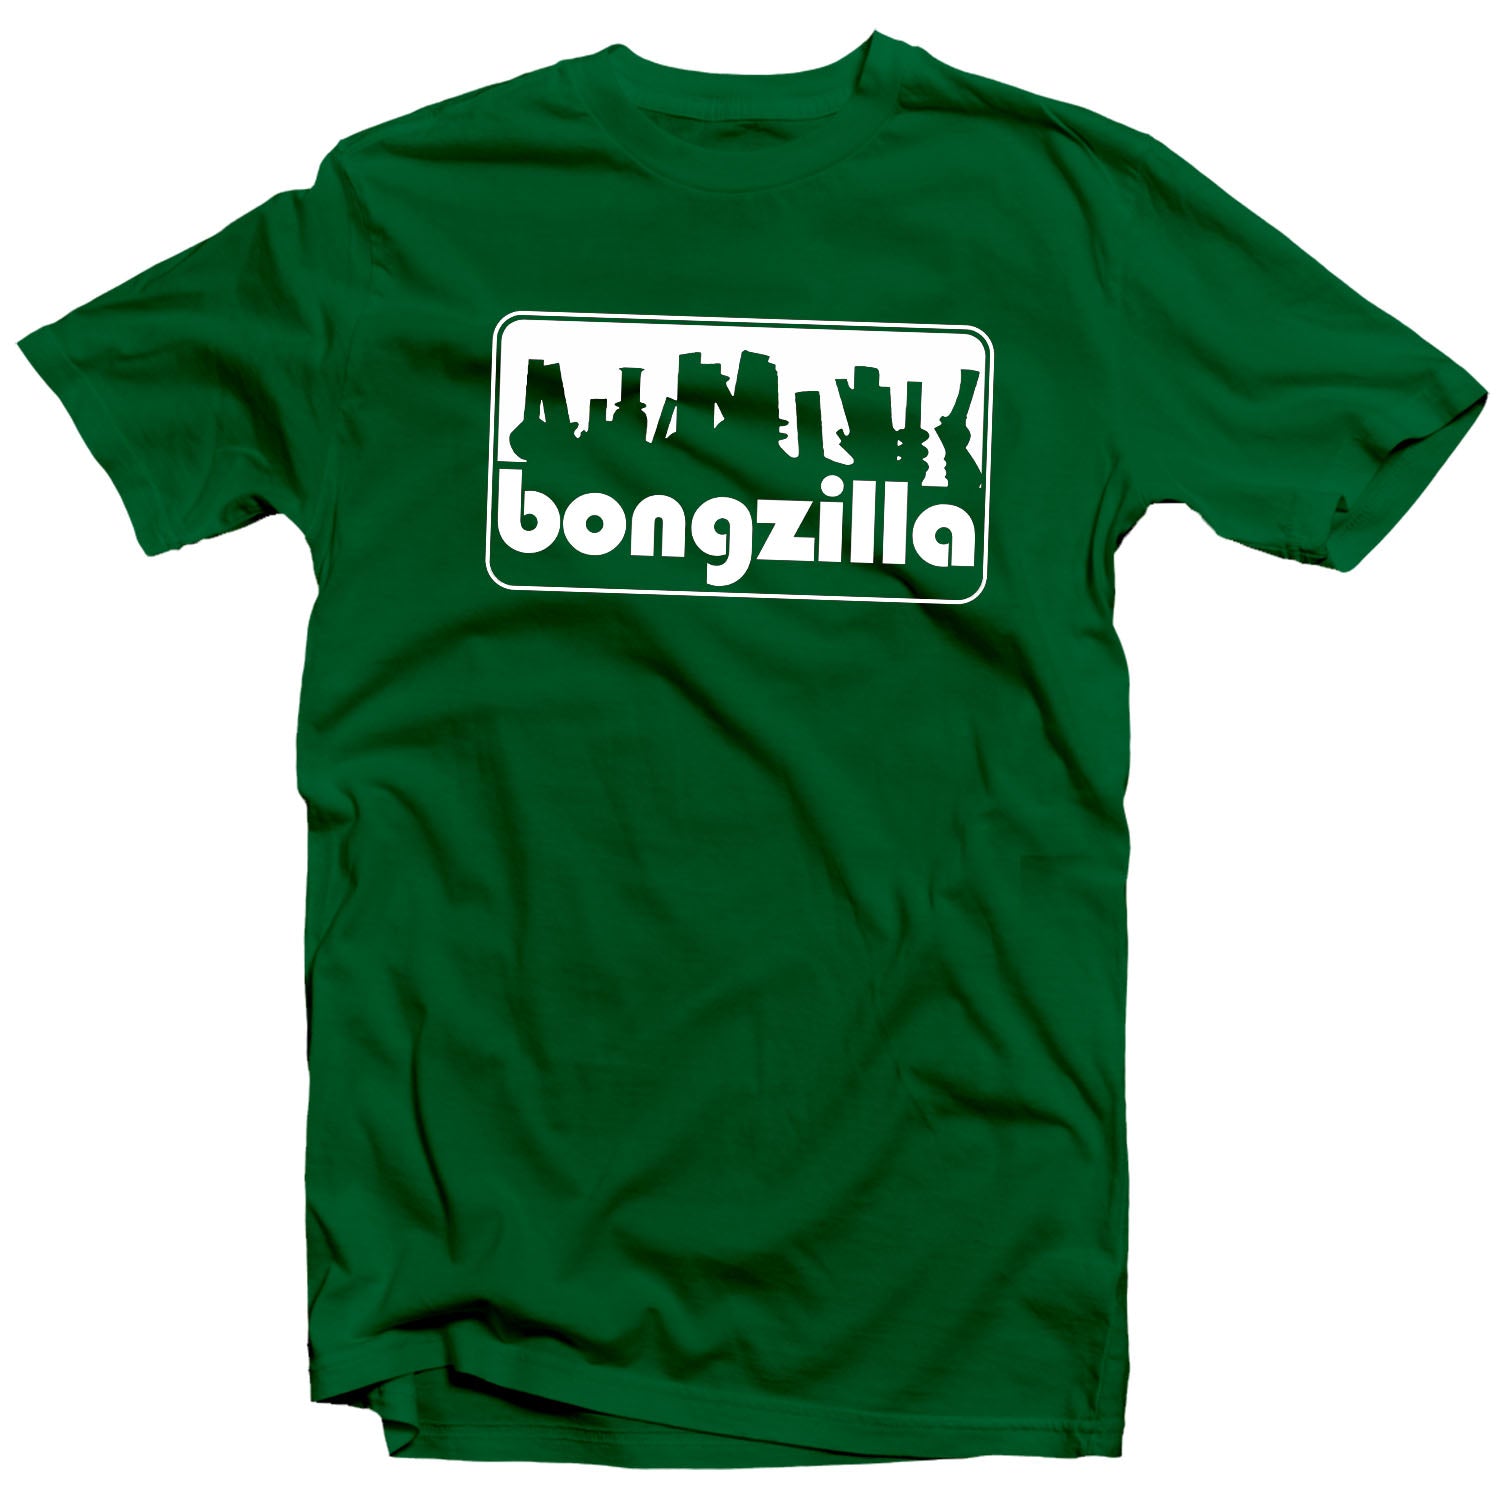 Bongzilla "Methods for Attaining Extreme Altitudes" T-Shirt